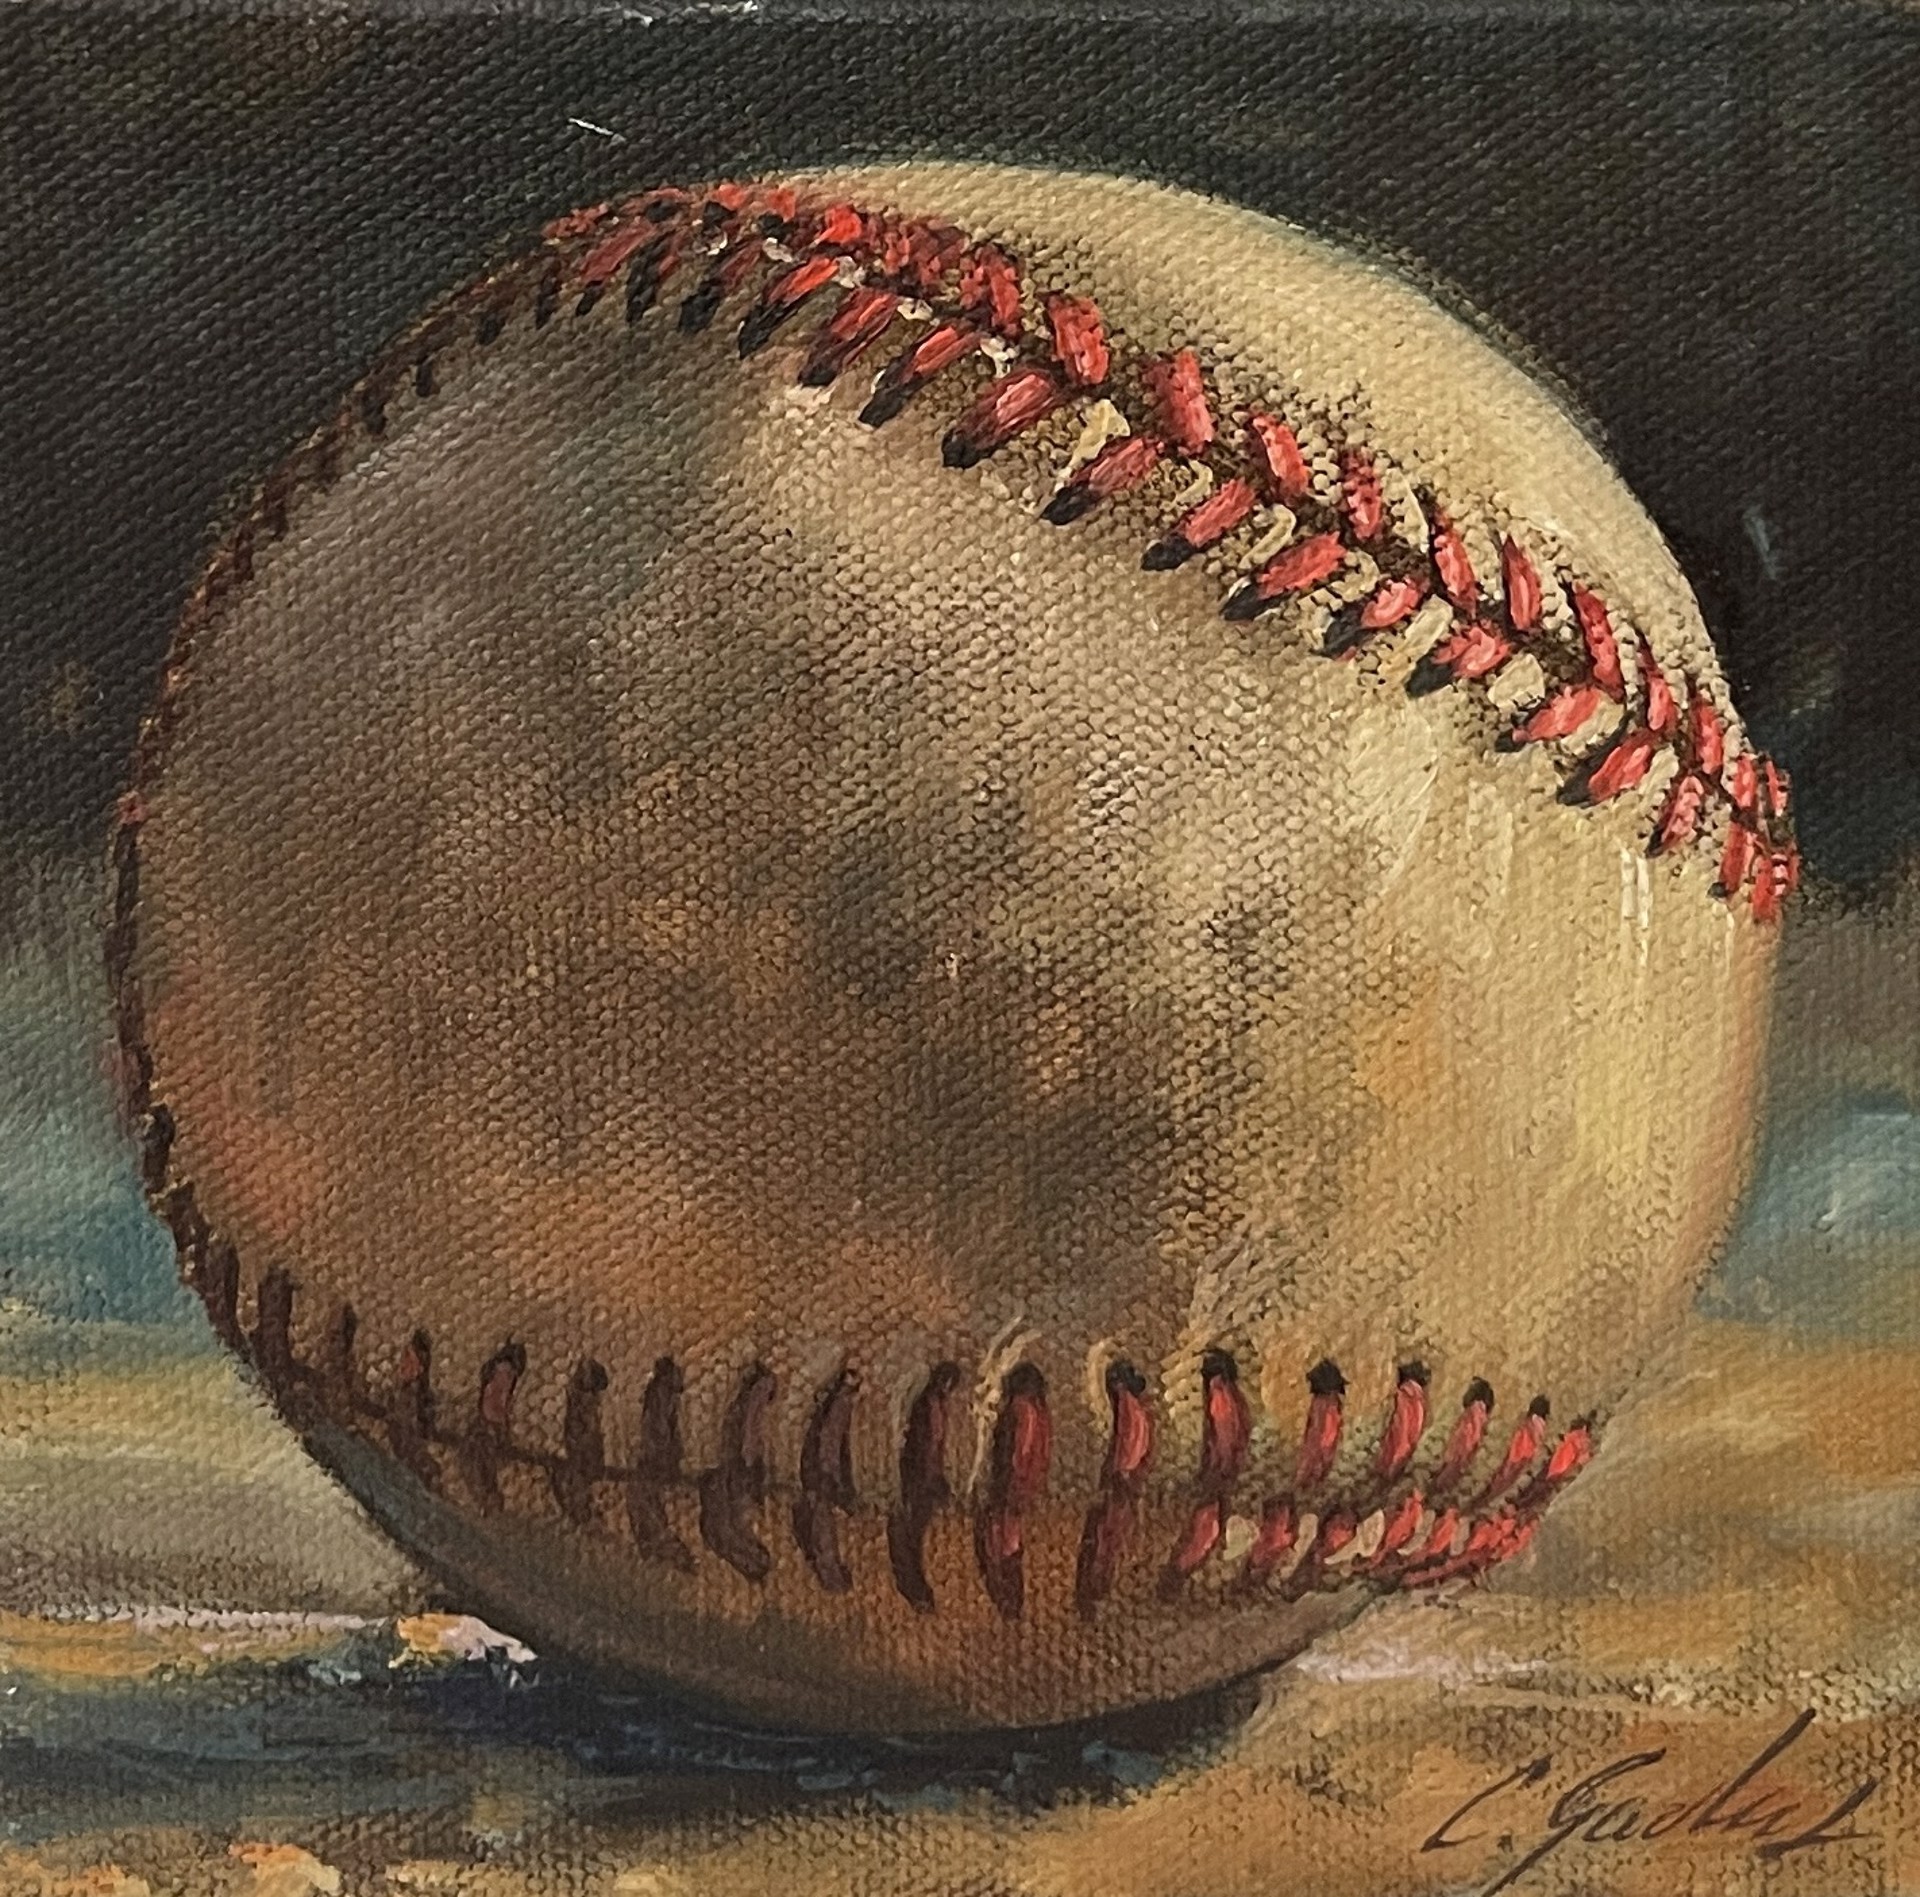 Baseball Study by Carrie Jadus